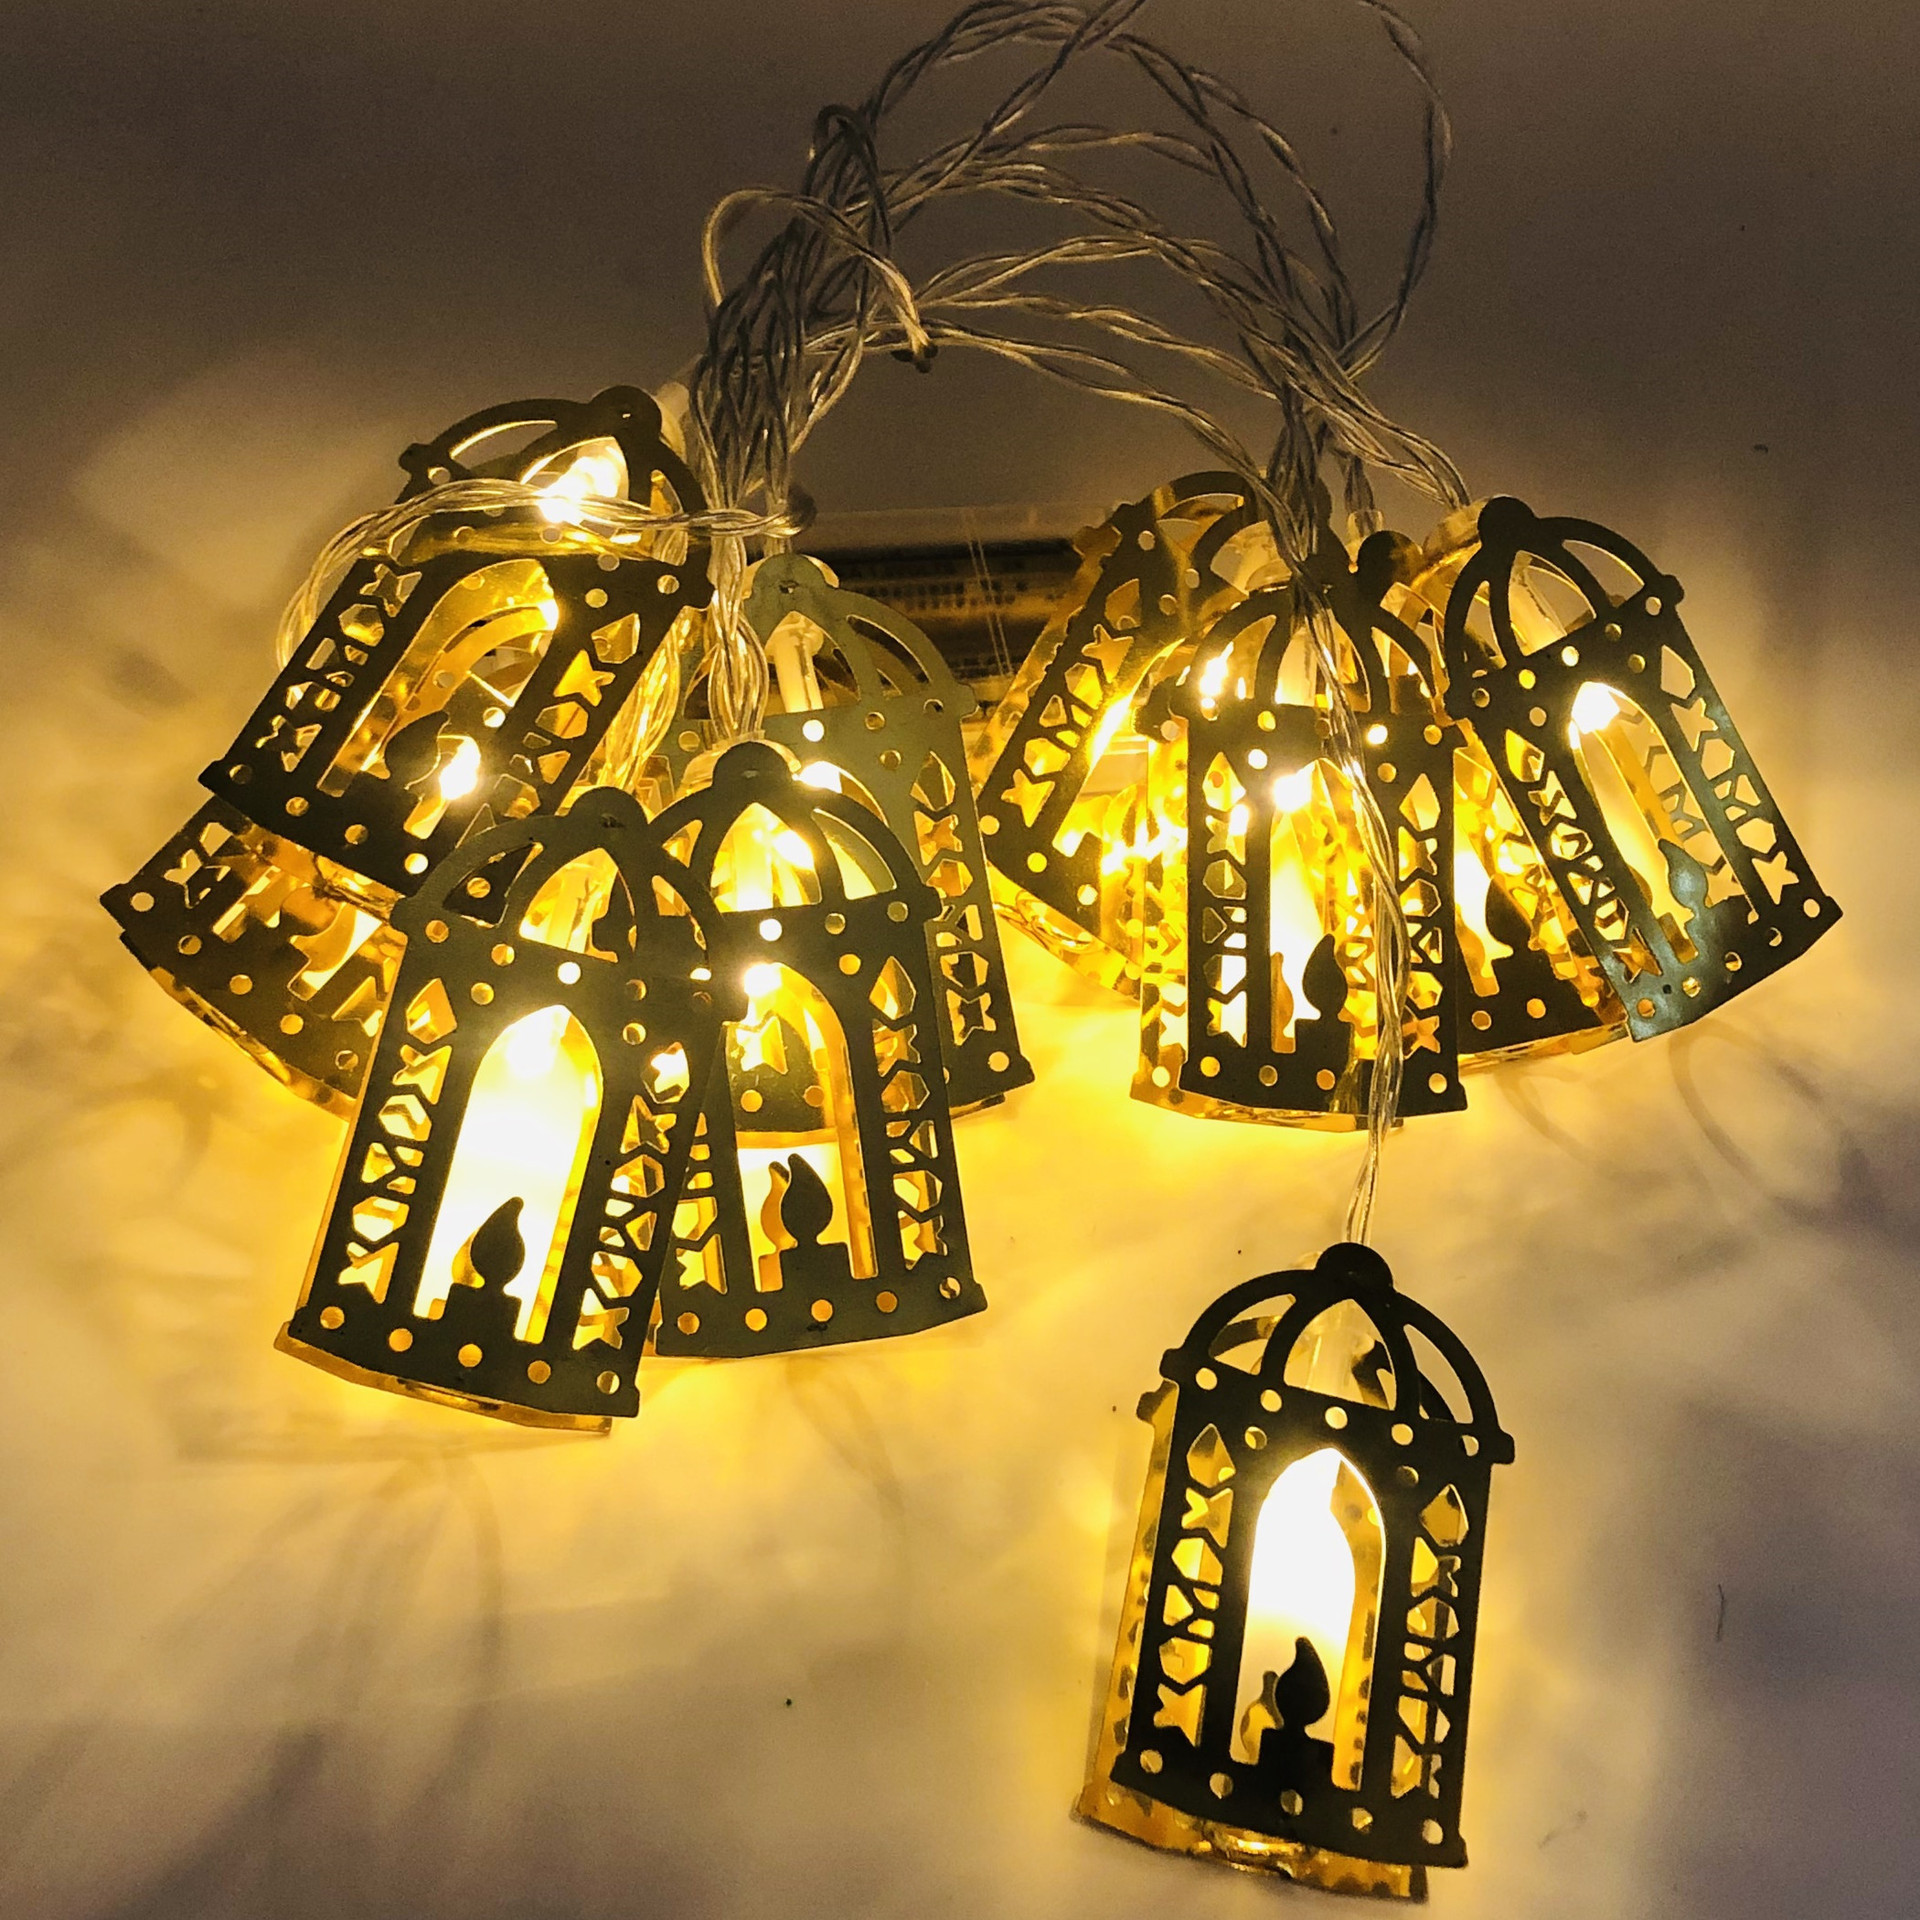 Middle East Gulbang Festival Lighting Chain Led Wrought Iron Moon Castle XINGX Palace Eid Lighting USB